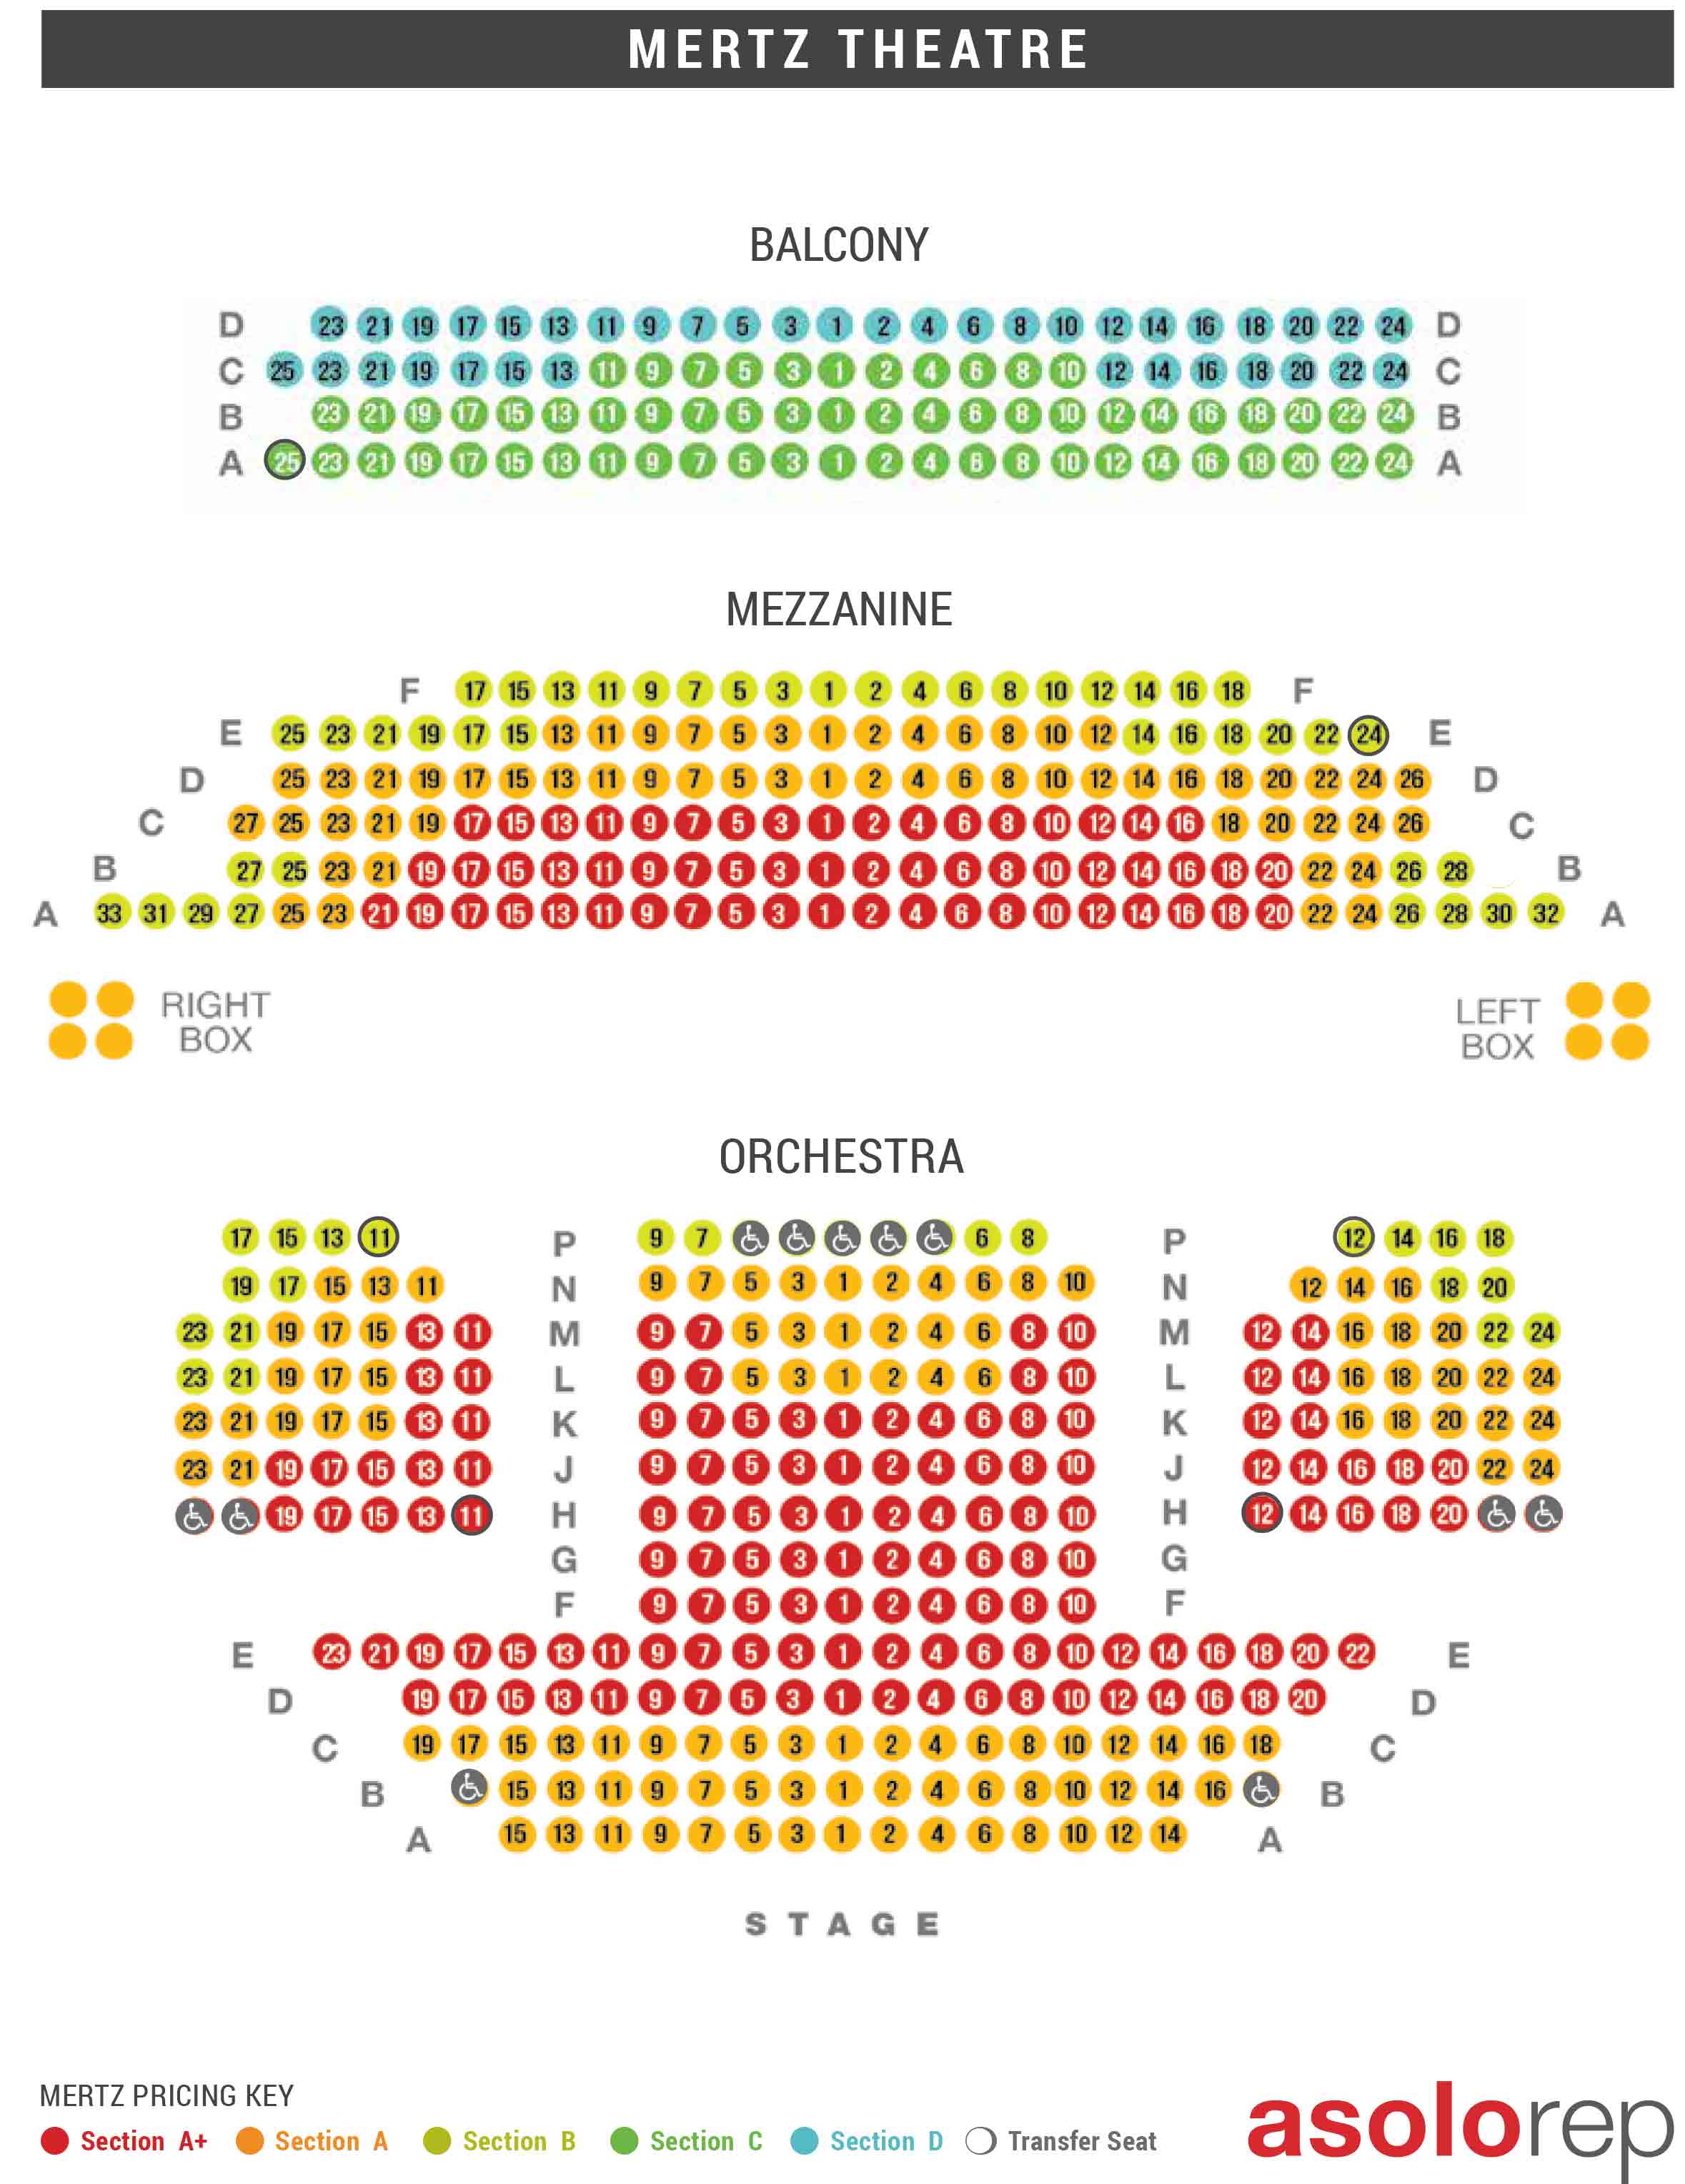 Mertz Theatre Seating Chart